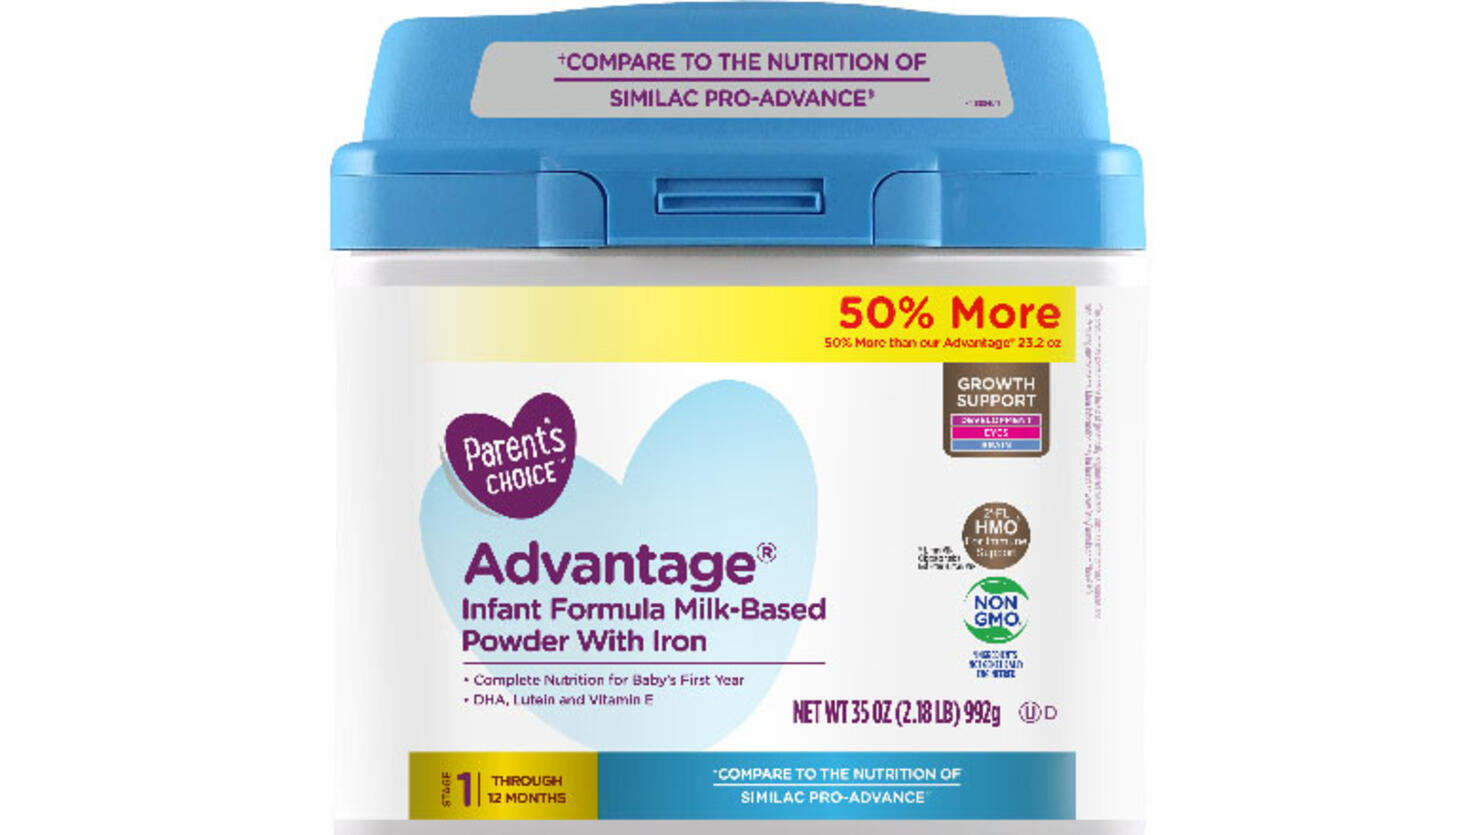 Parent's Choice Advantage Infant Formula Milk-Based Powder with Iron